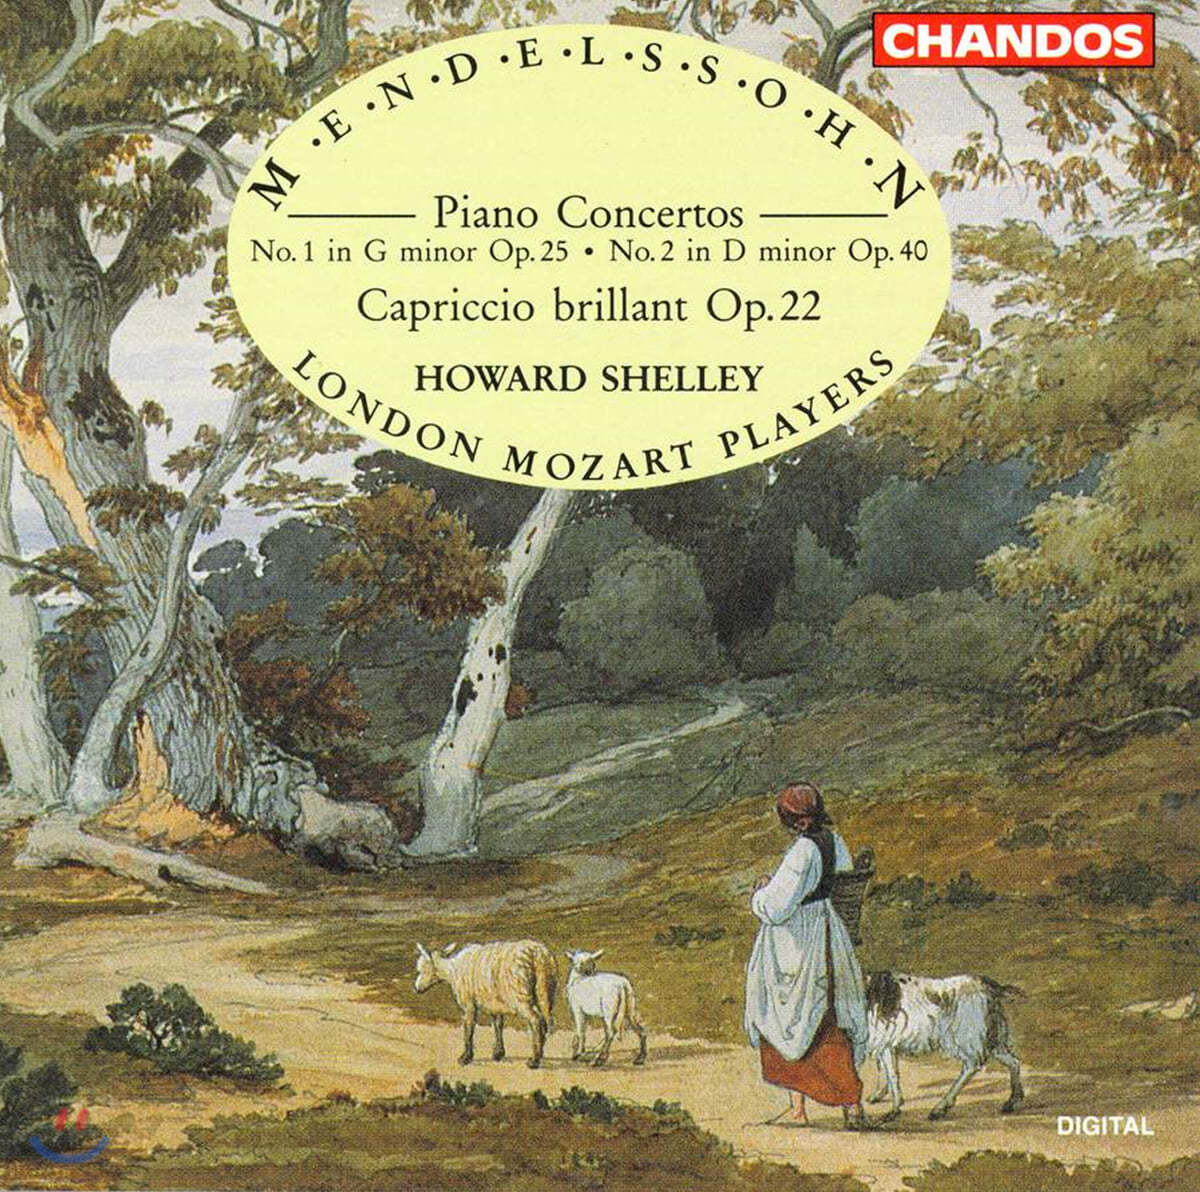 Howard Shelley 멘델스존: 피아노 협주곡 1, 2번 (Mendelssohn: Piano Concerto Op. 25, 40)